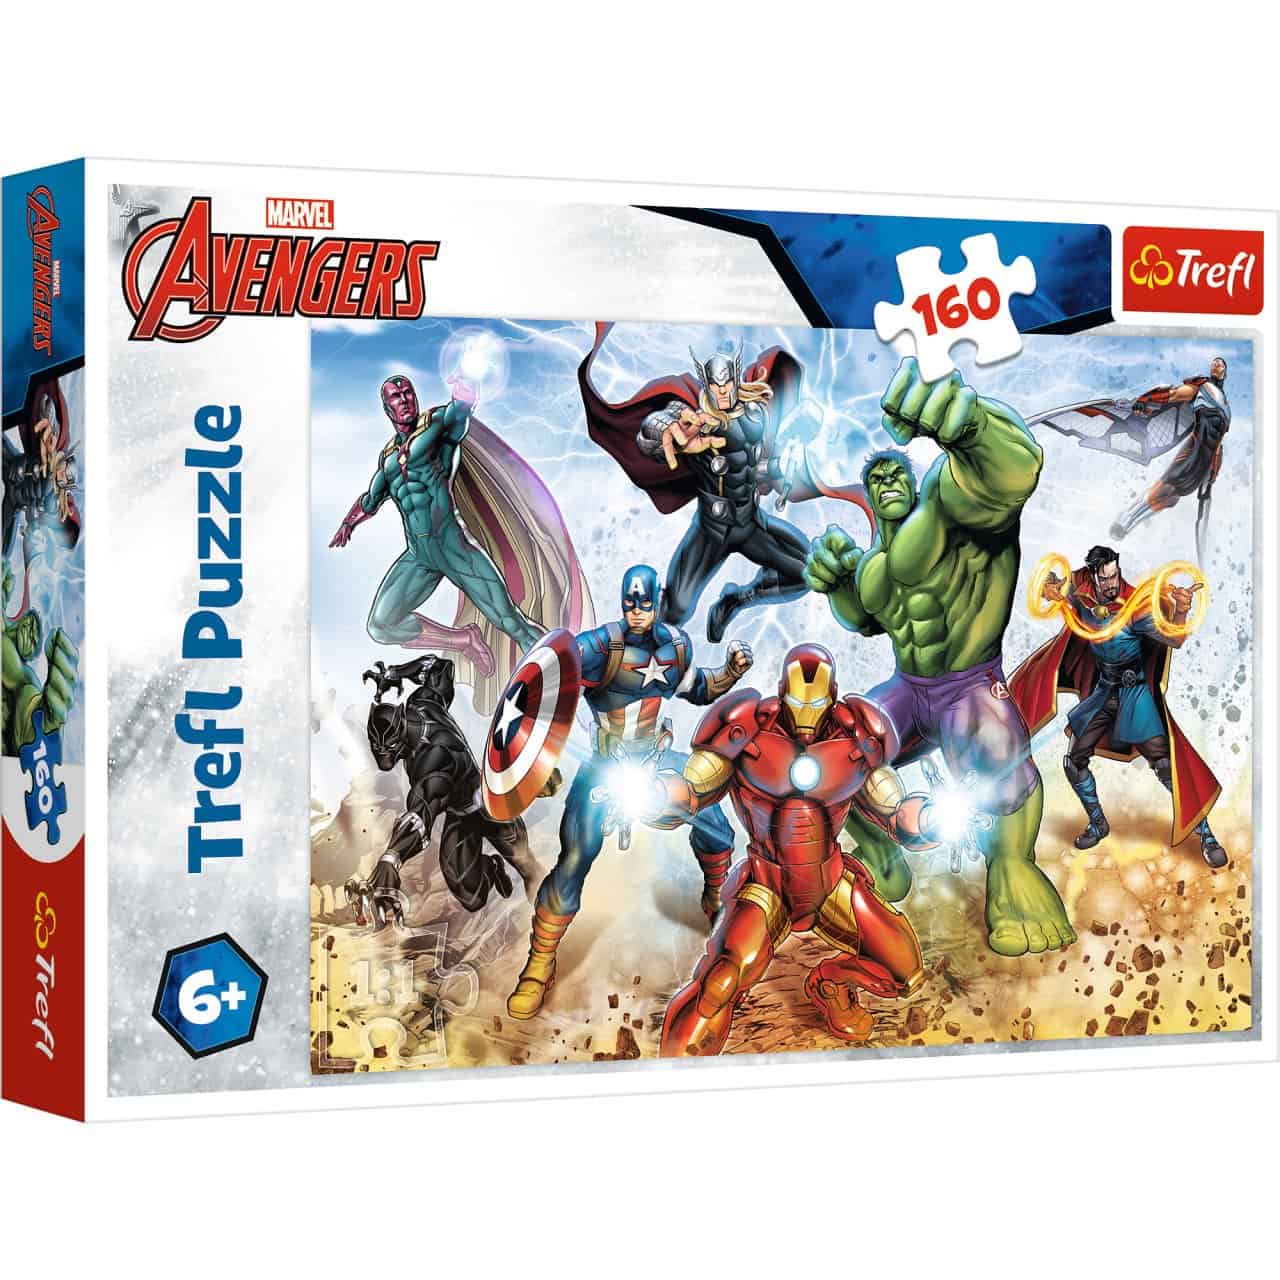 Trefl Disney Marvel, The Avengers - Puzzle 160 pieces - Kalimat Store